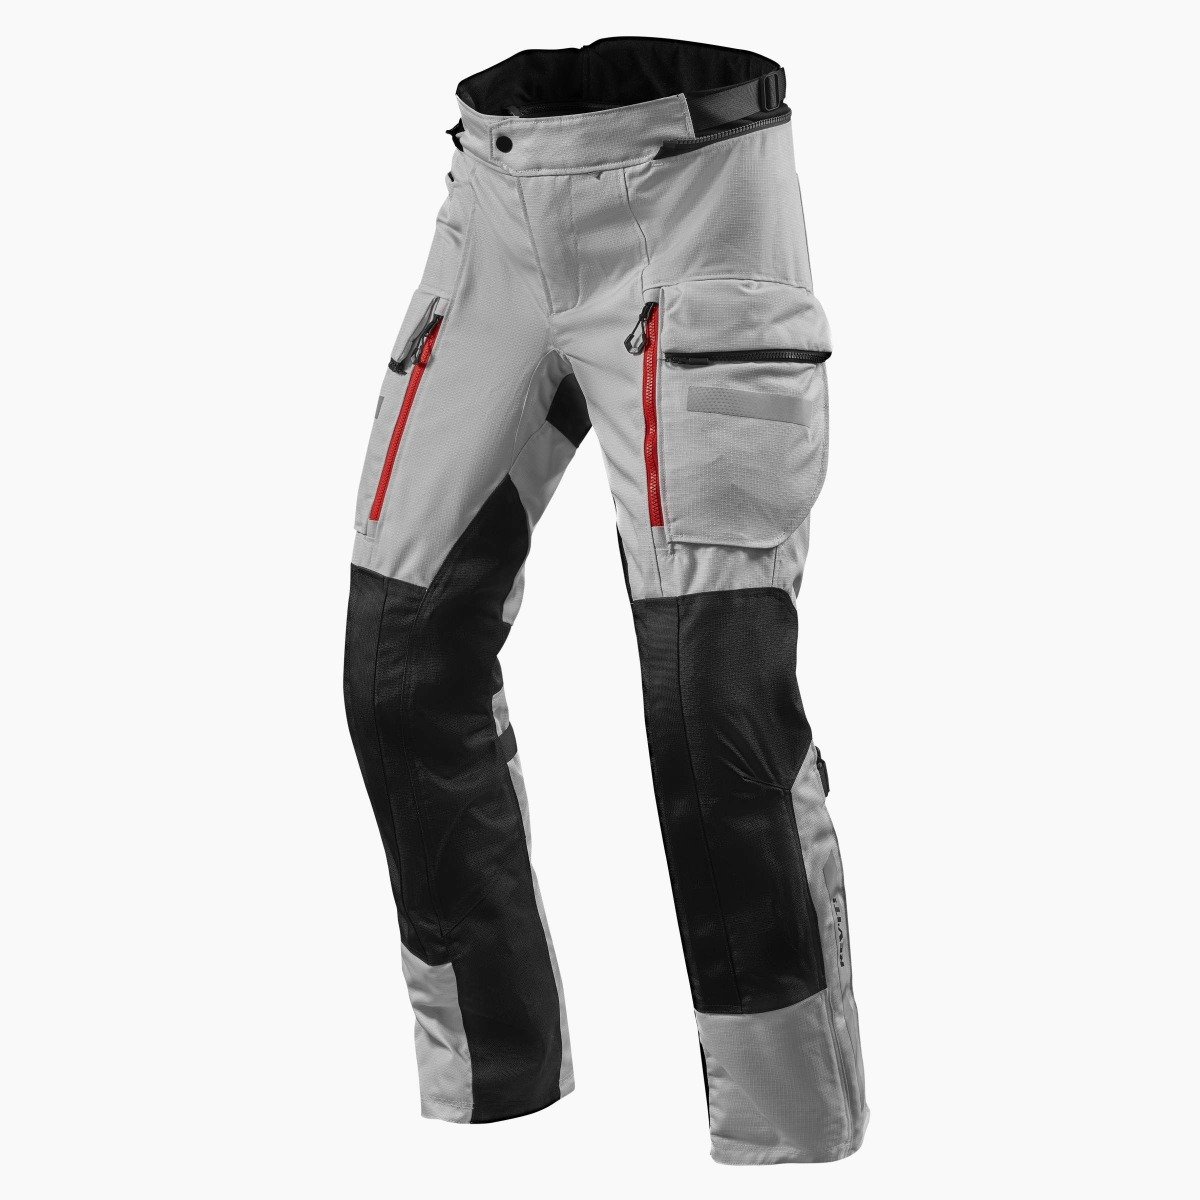 Image of REV'IT! Sand 4 H2O Short Silver Black Motorcycle Pants Talla XL